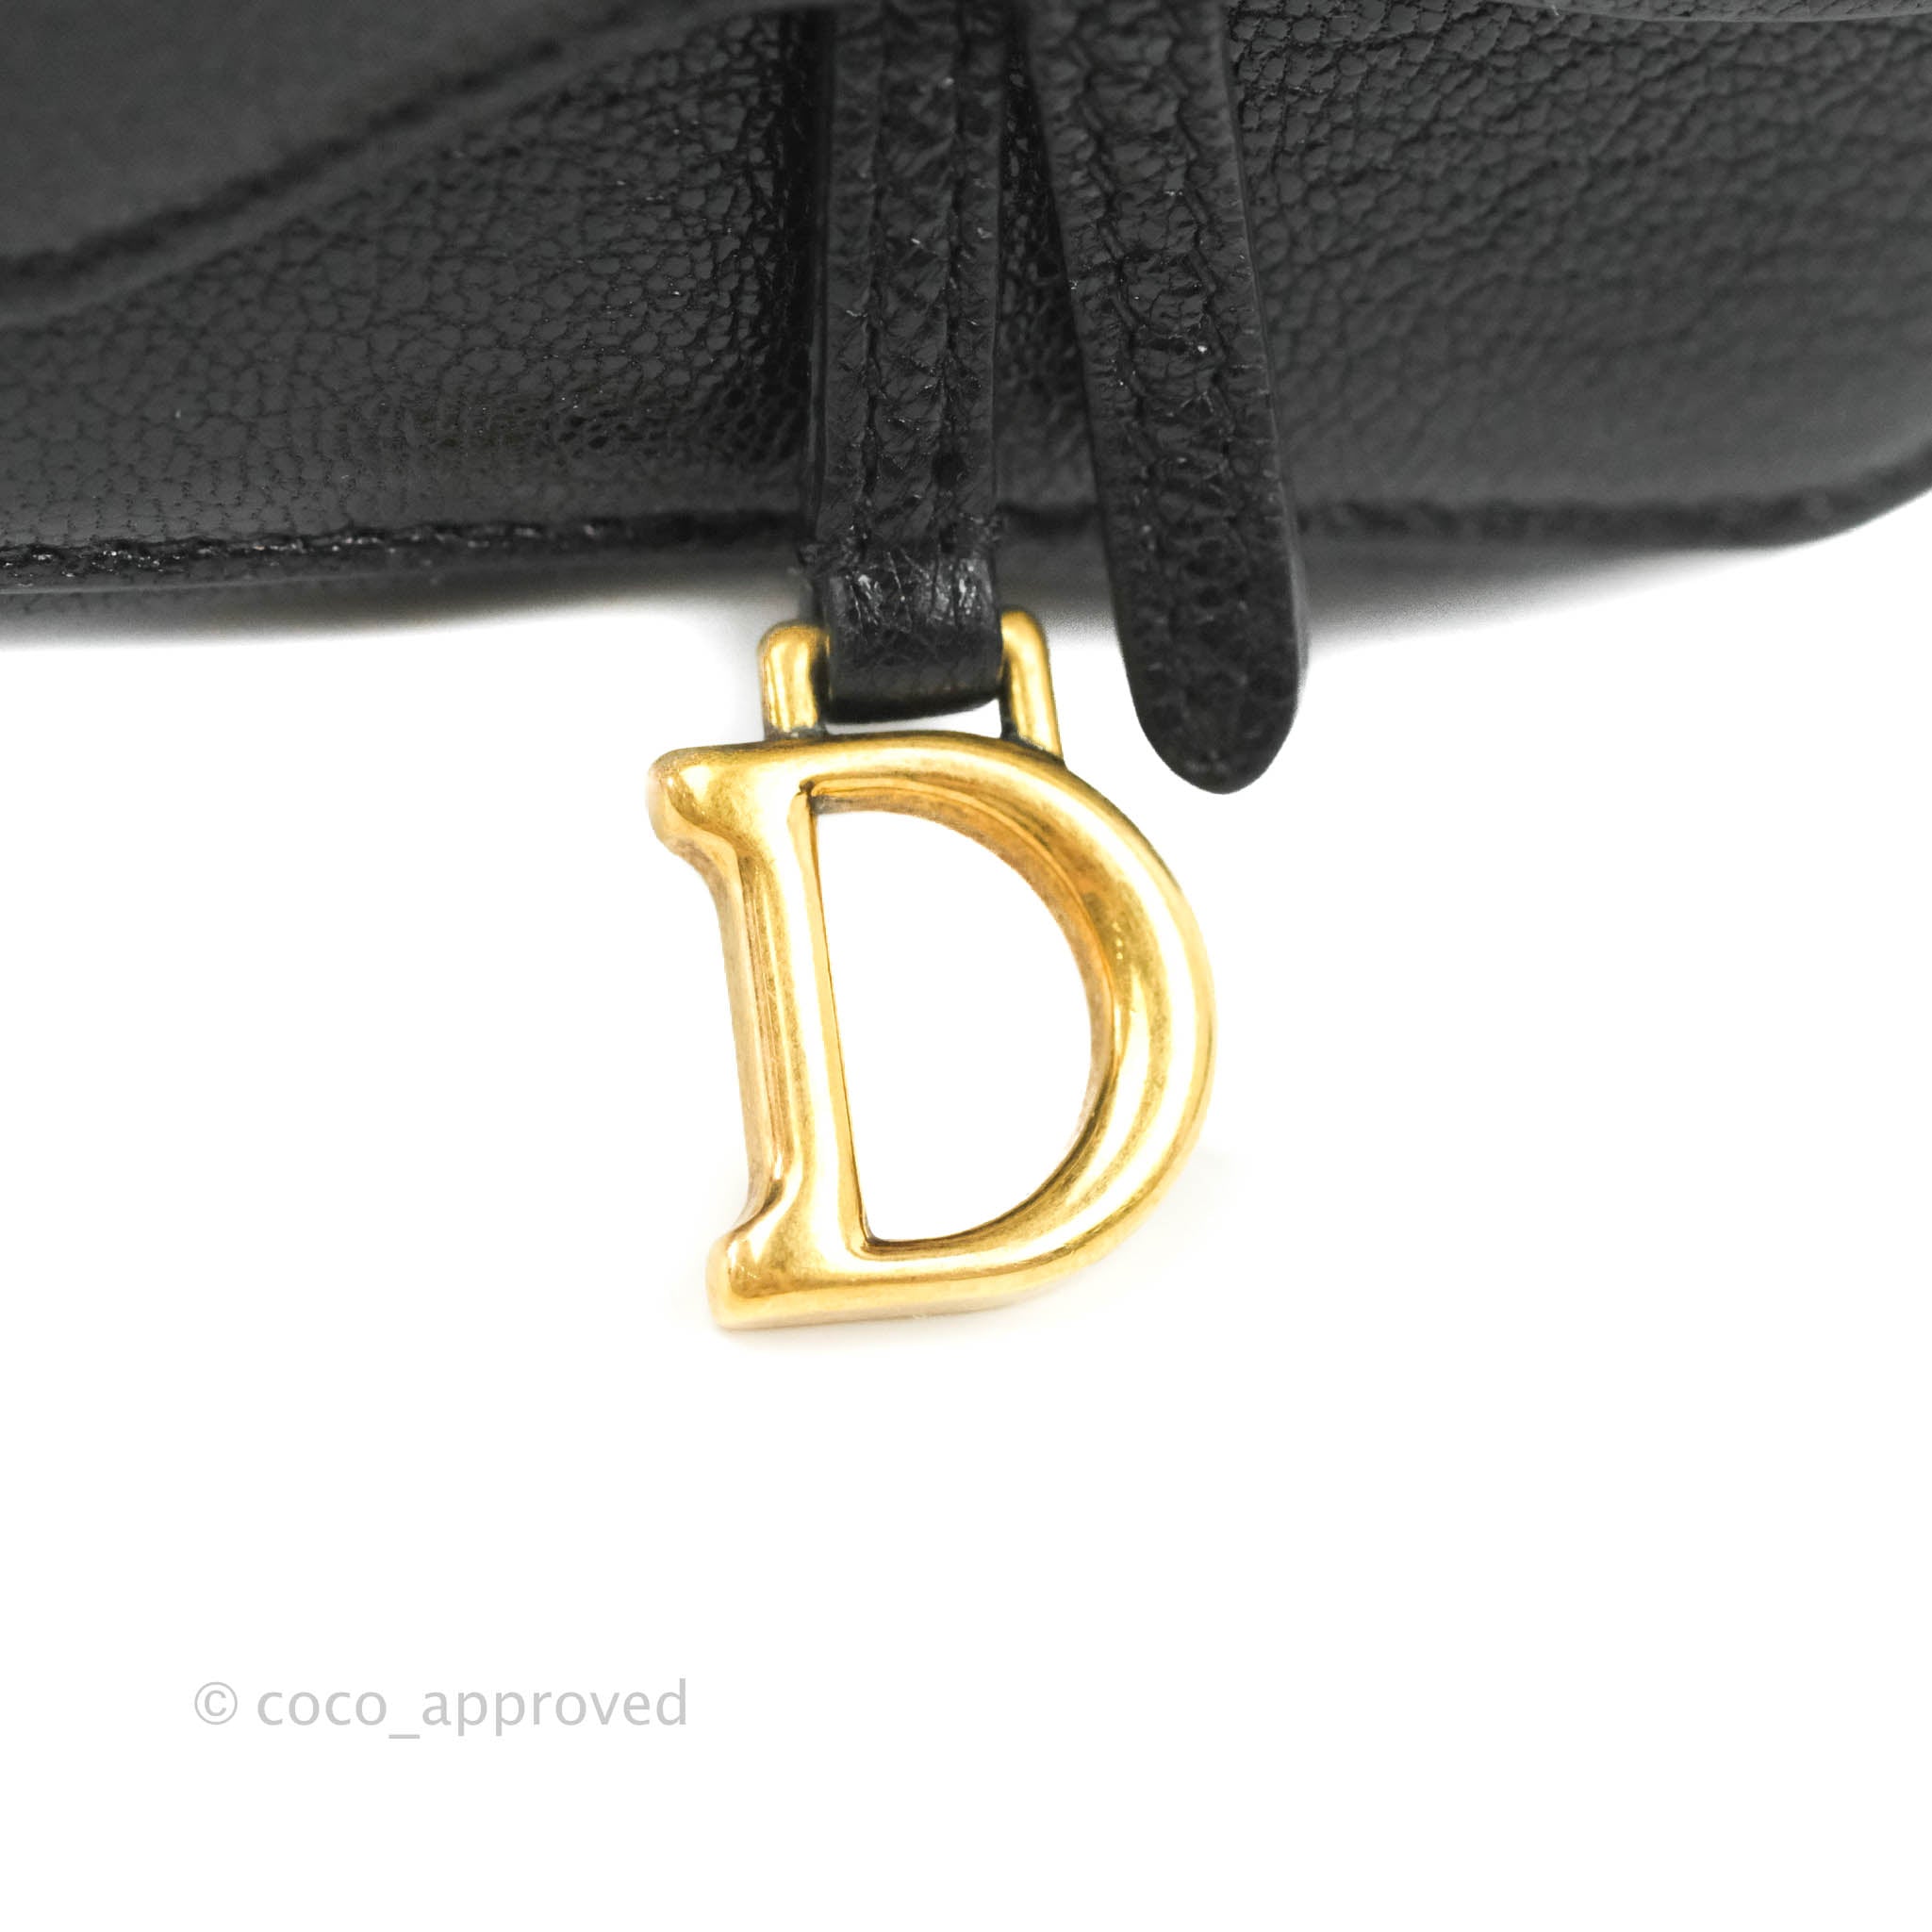 Dior Saddle Nano Pouch In Black Goatskin